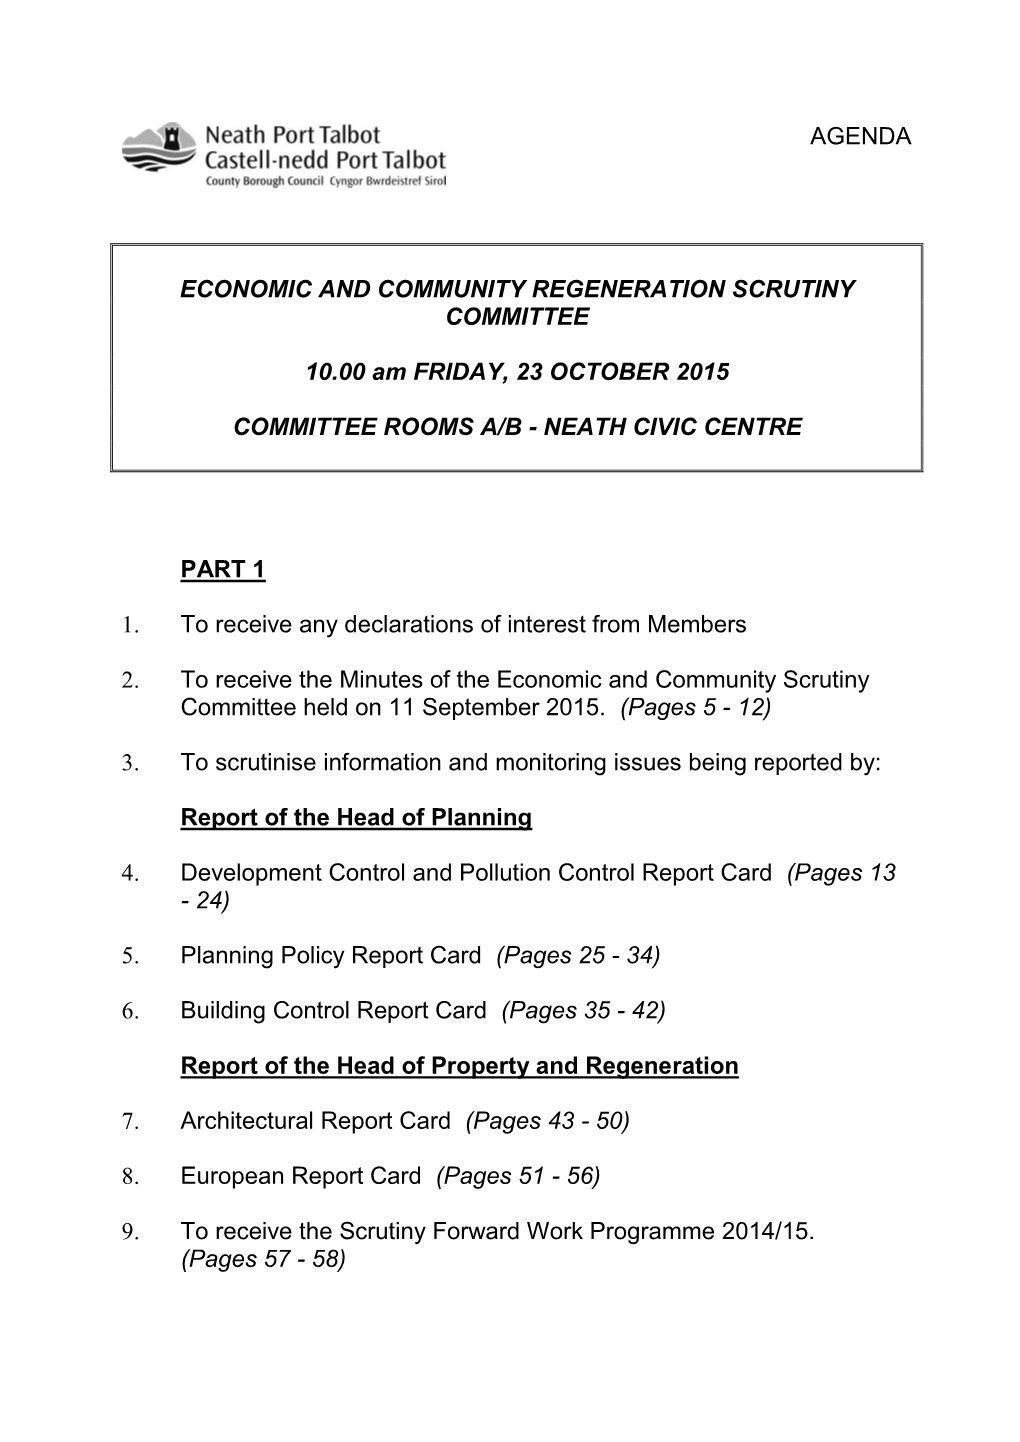 (Public Pack)Agenda Document for Economic and Community